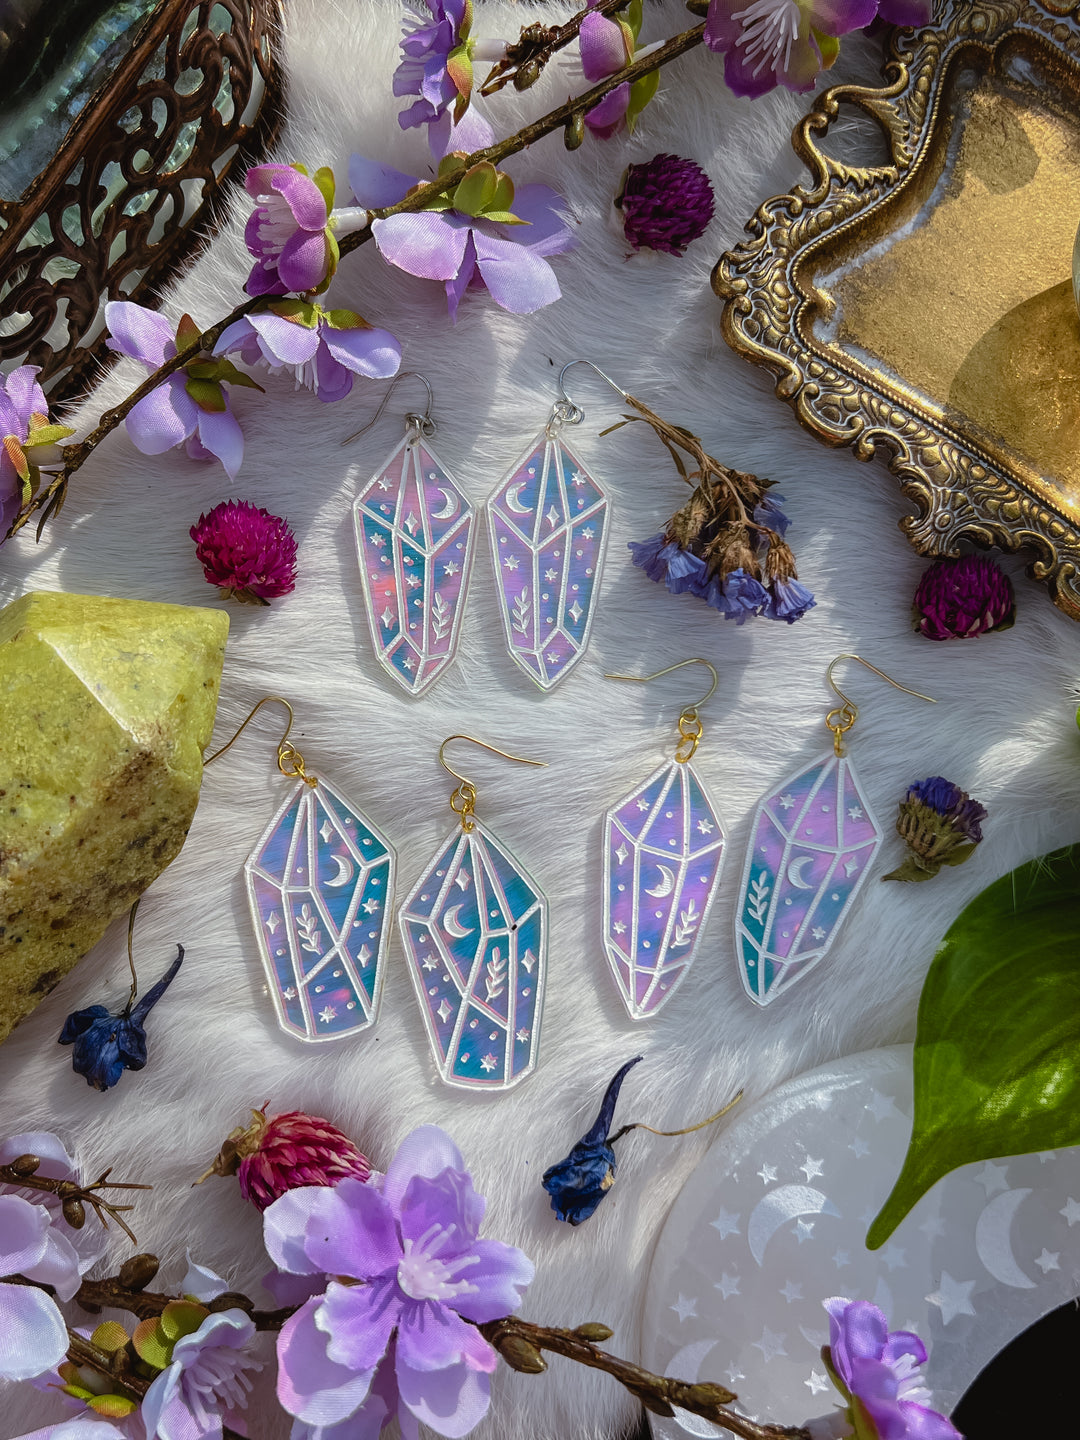 Iridescent Crystal Earrings